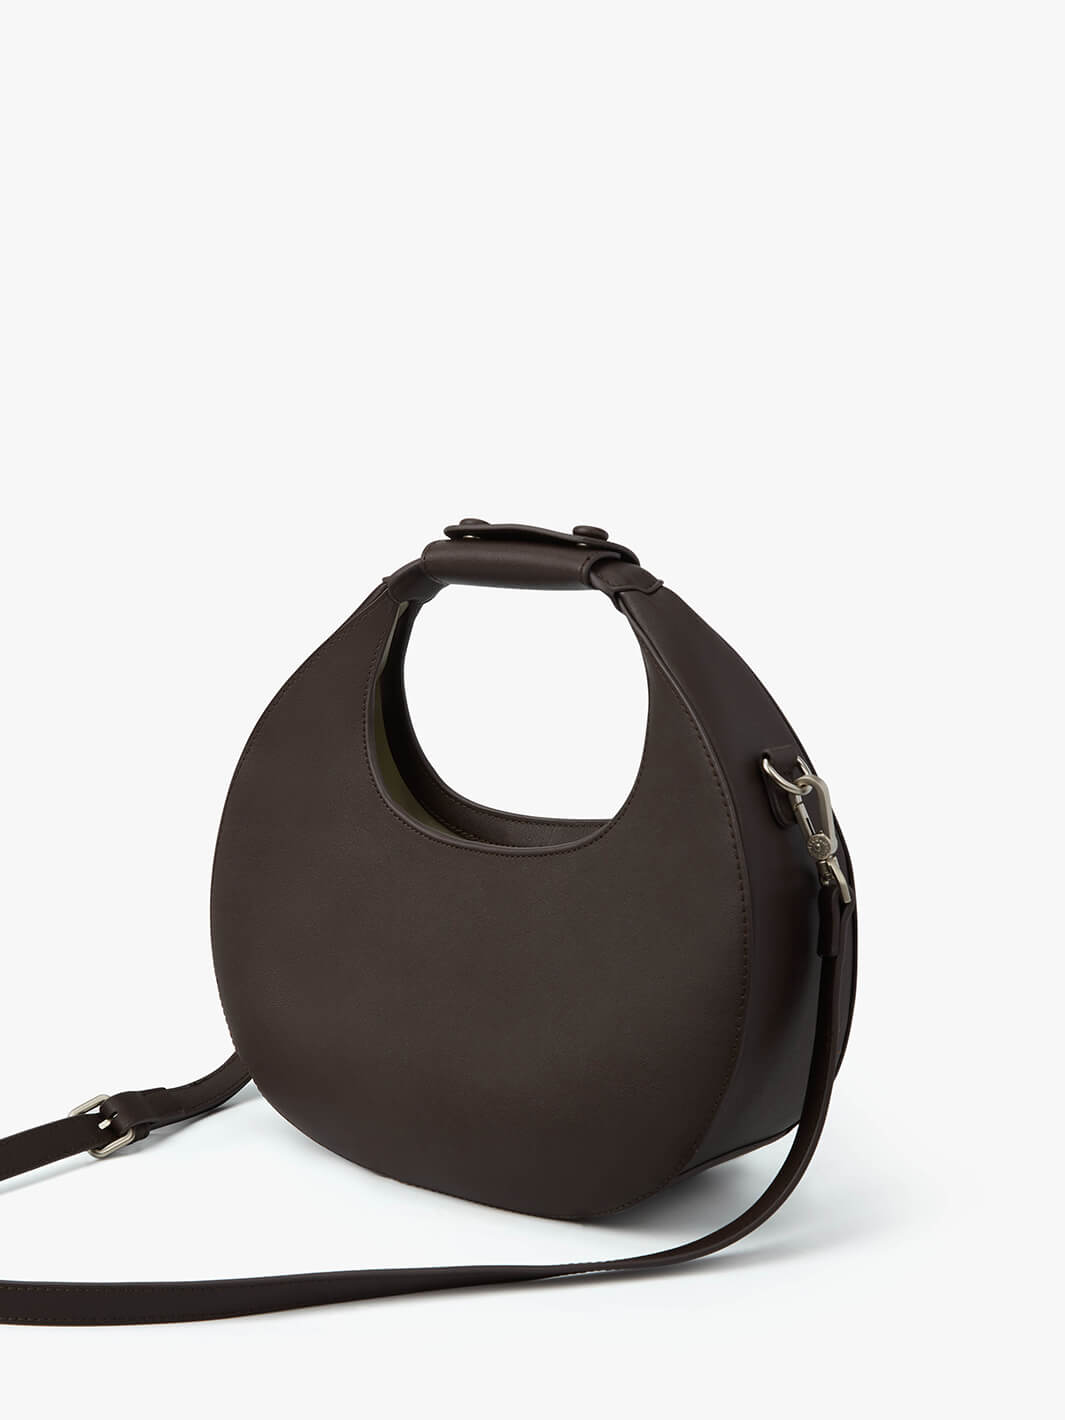 Selene Shoulder Bag Made From Italy Genuine Leather Bag 